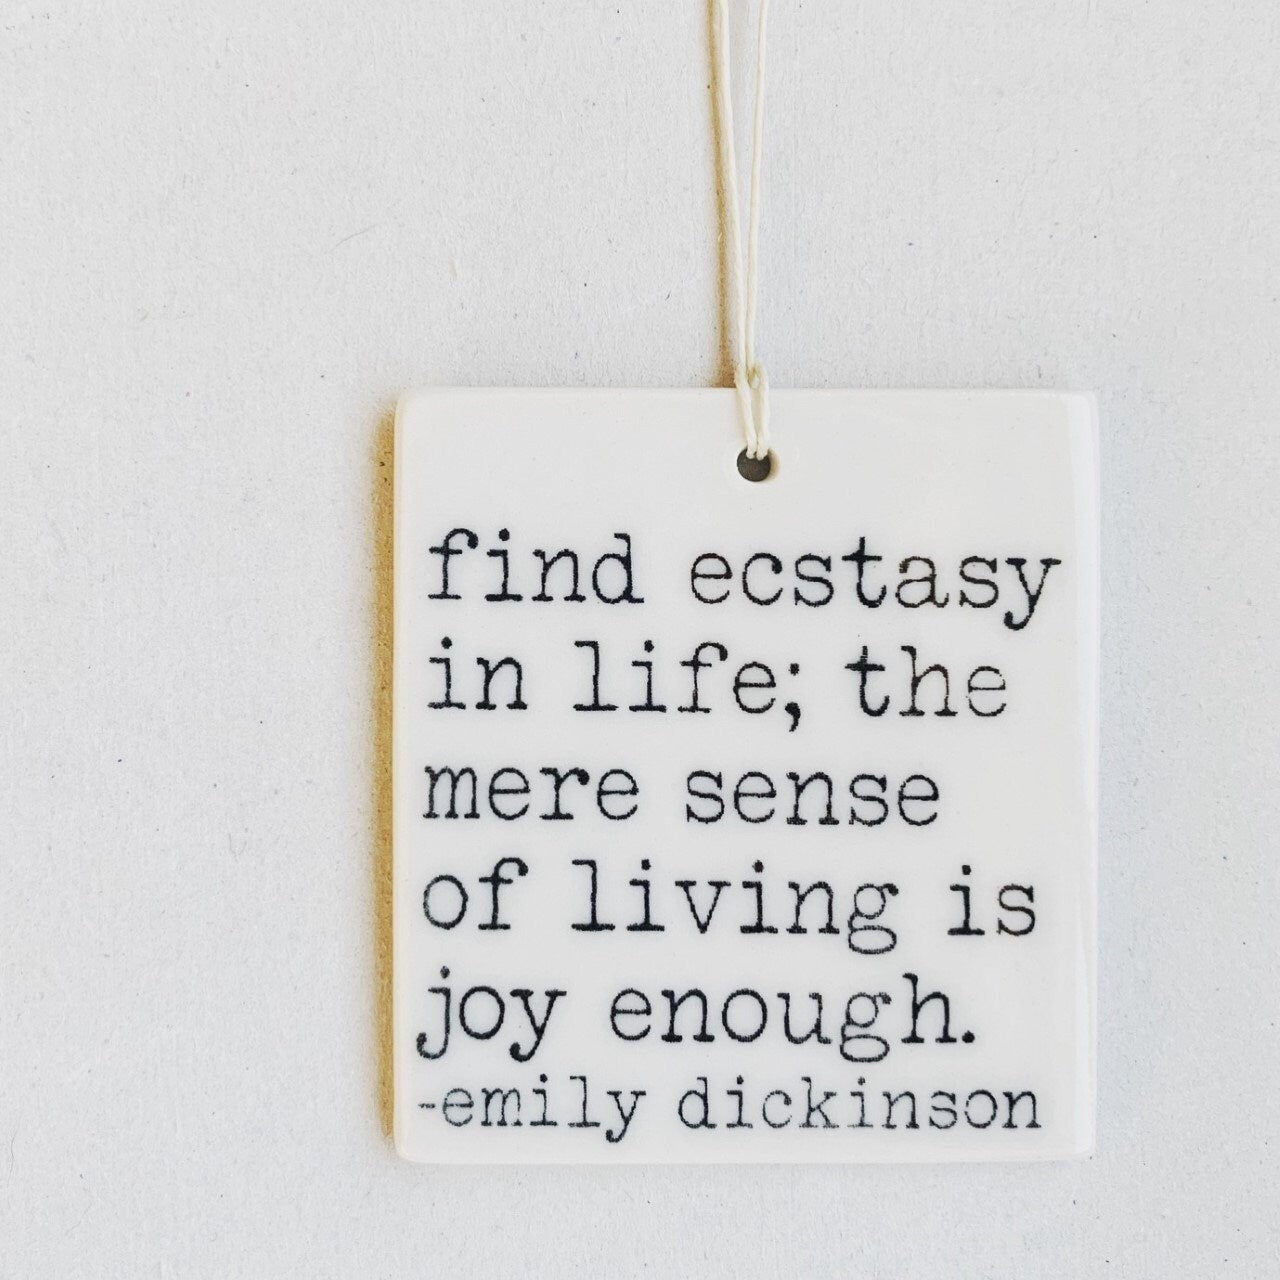 emily dickinson | ceramic wall tag | ceramic wall art | screenprinted ceramics | gratitude | joy | wise words | wisdom quote